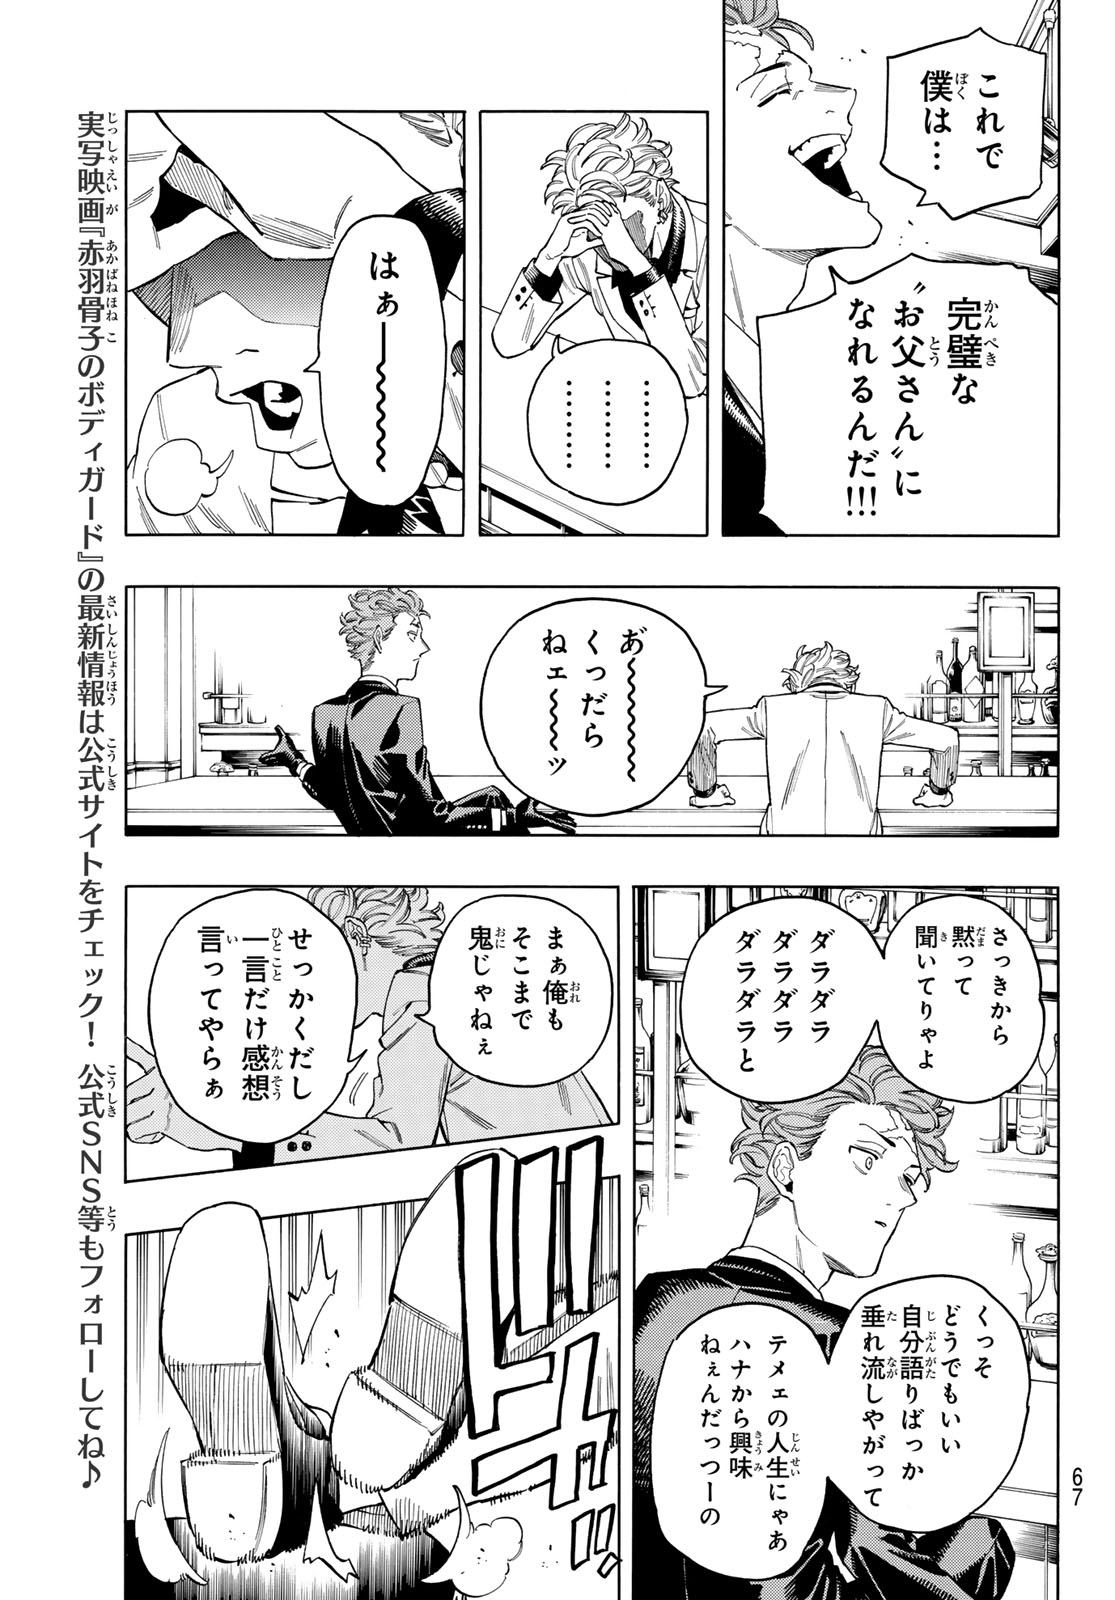 Akabane Honeko no Bodyguard - Chapter 85 - Page 9